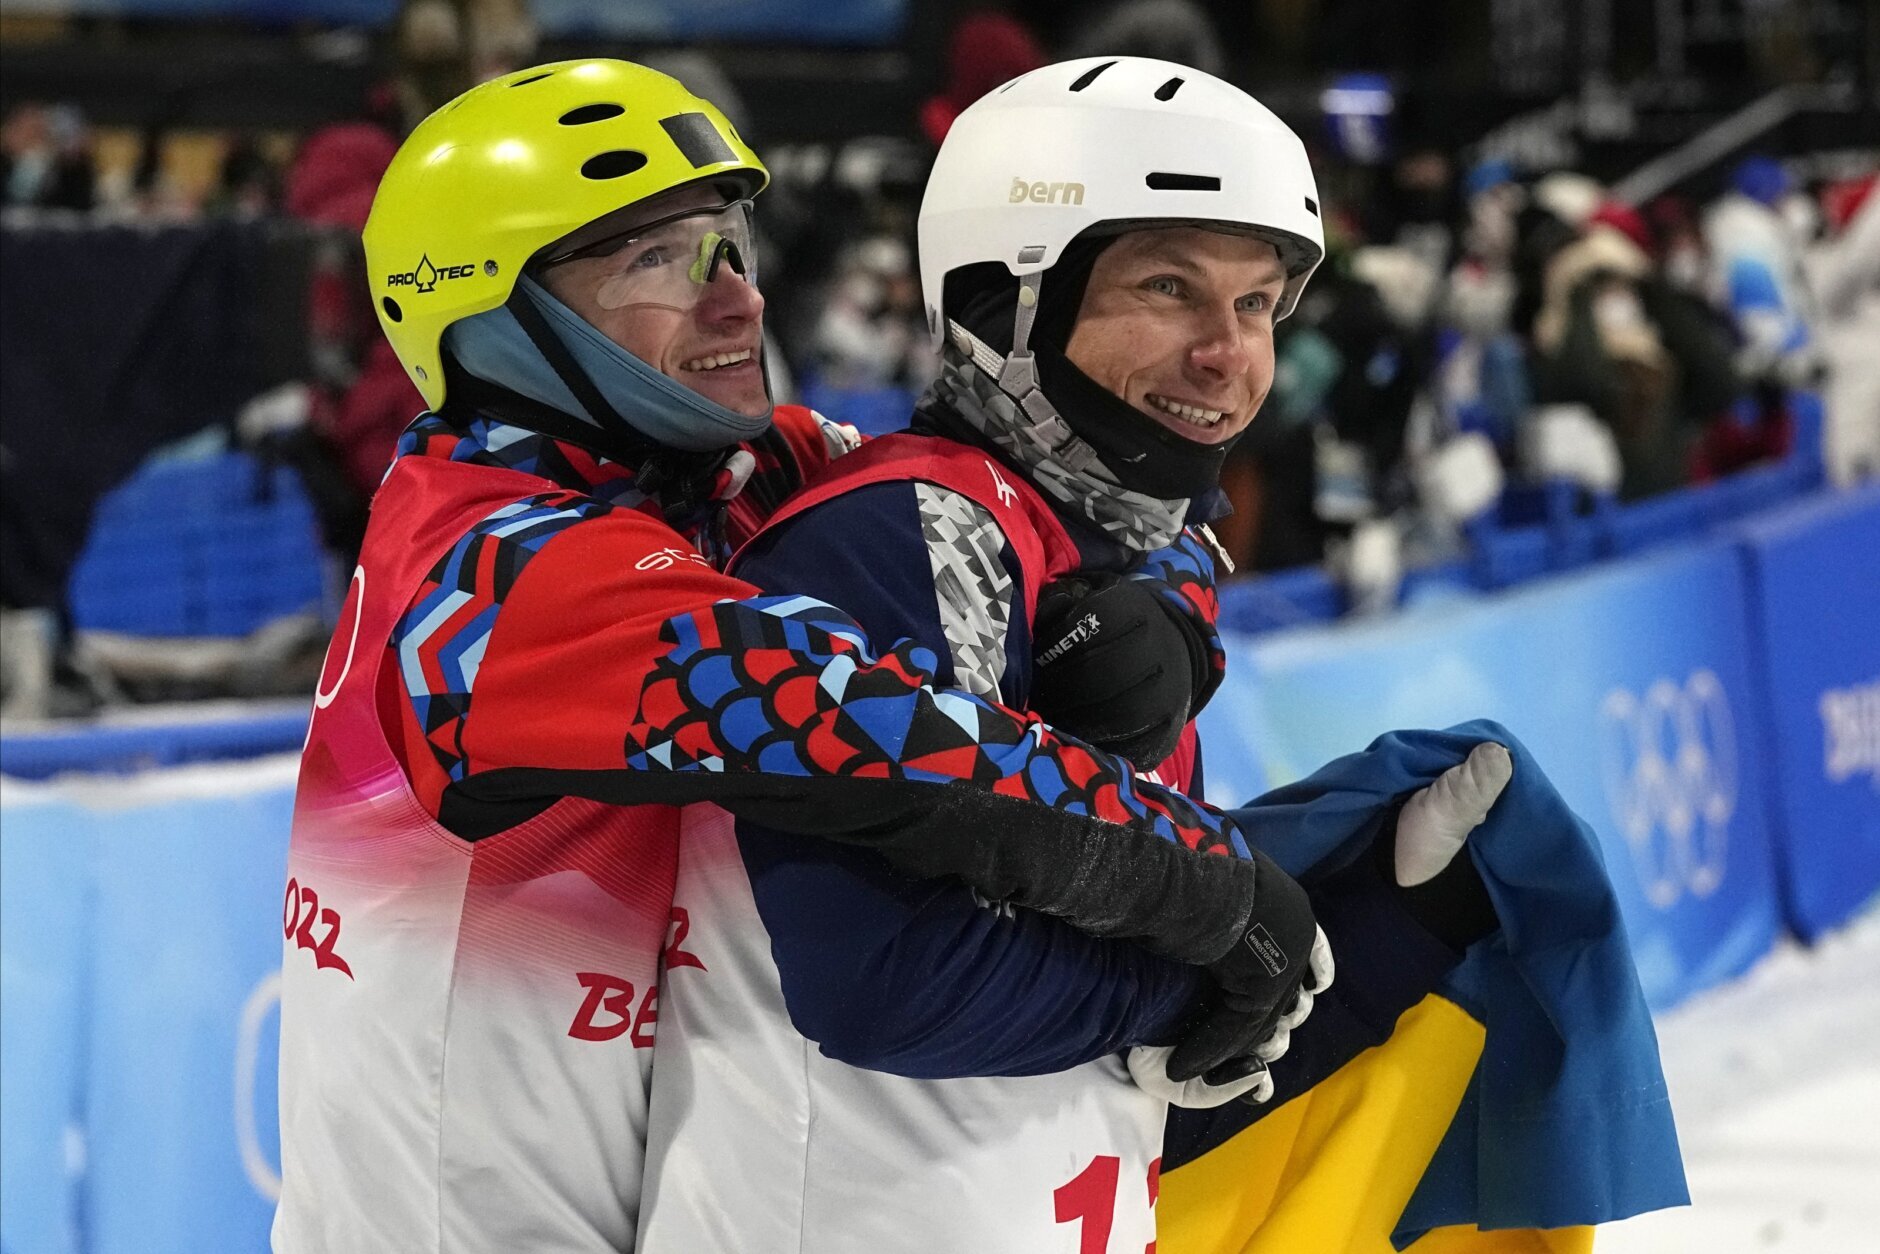 Two athletes hugging